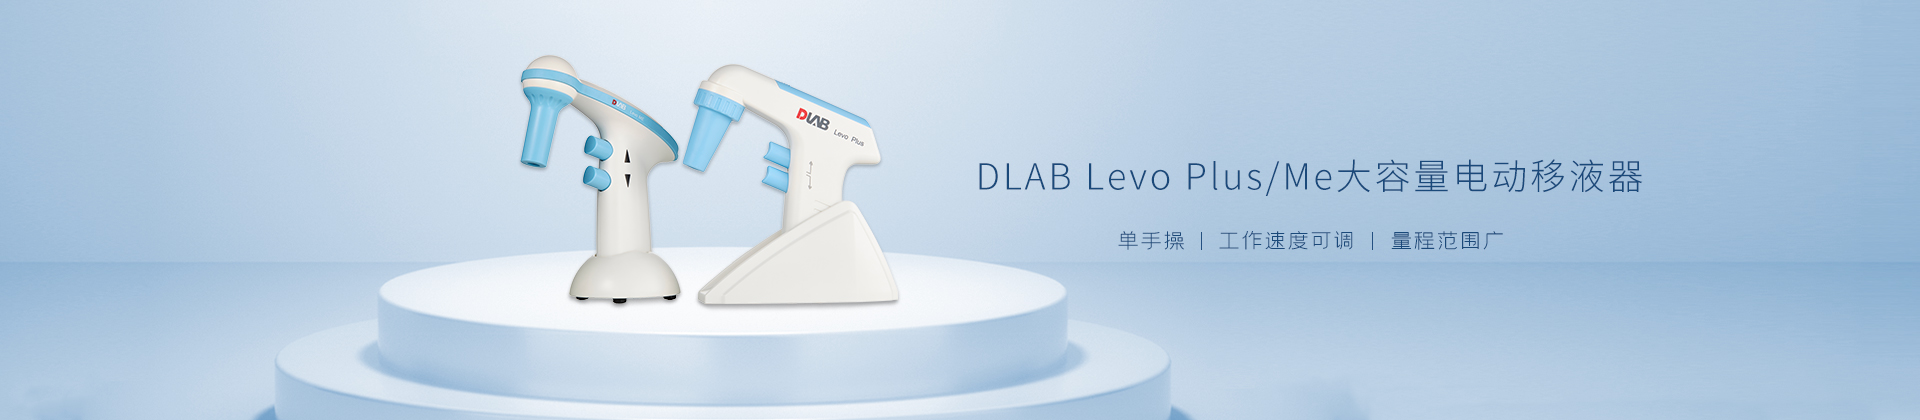 DLAB Levo Plus/Me大容量电动移液器